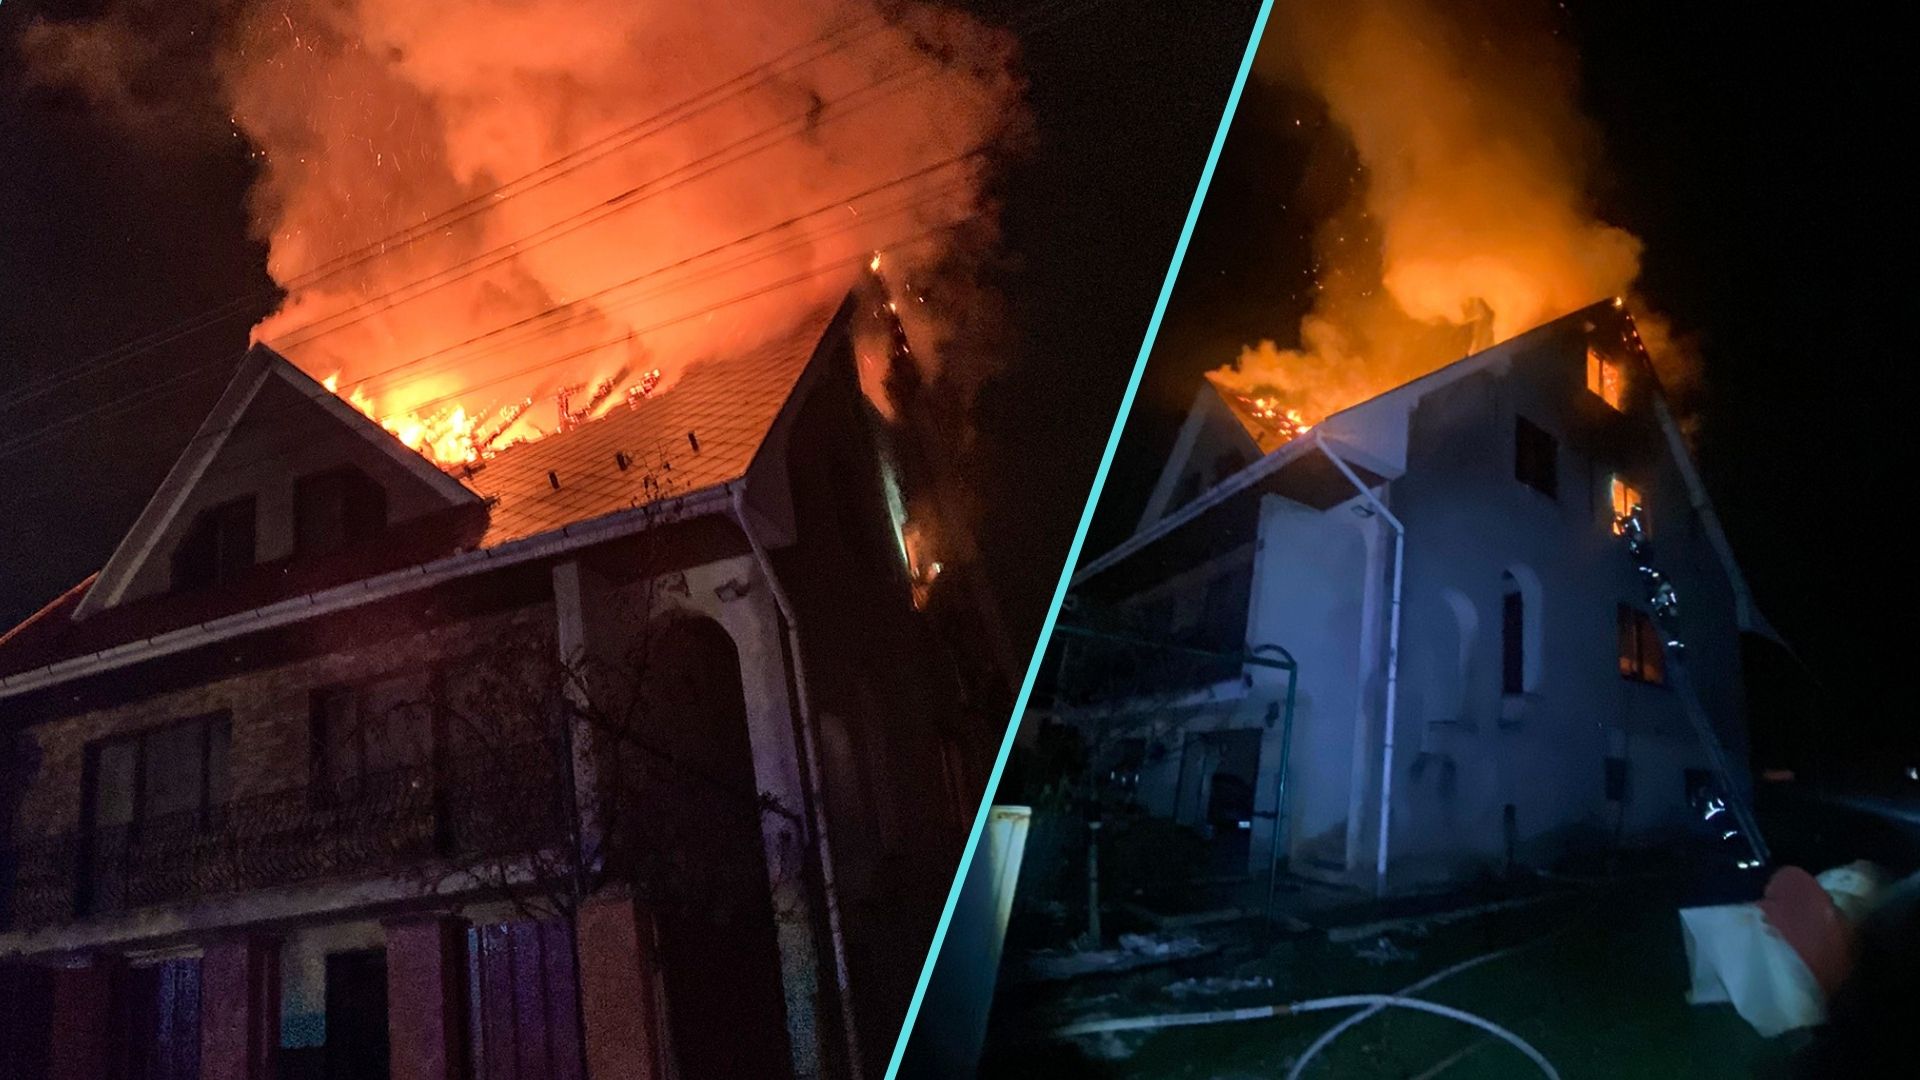 29 листопада о 20:19 в селі Великі Лази Ужгородського району сталася пожежа у триповерховому будинку.